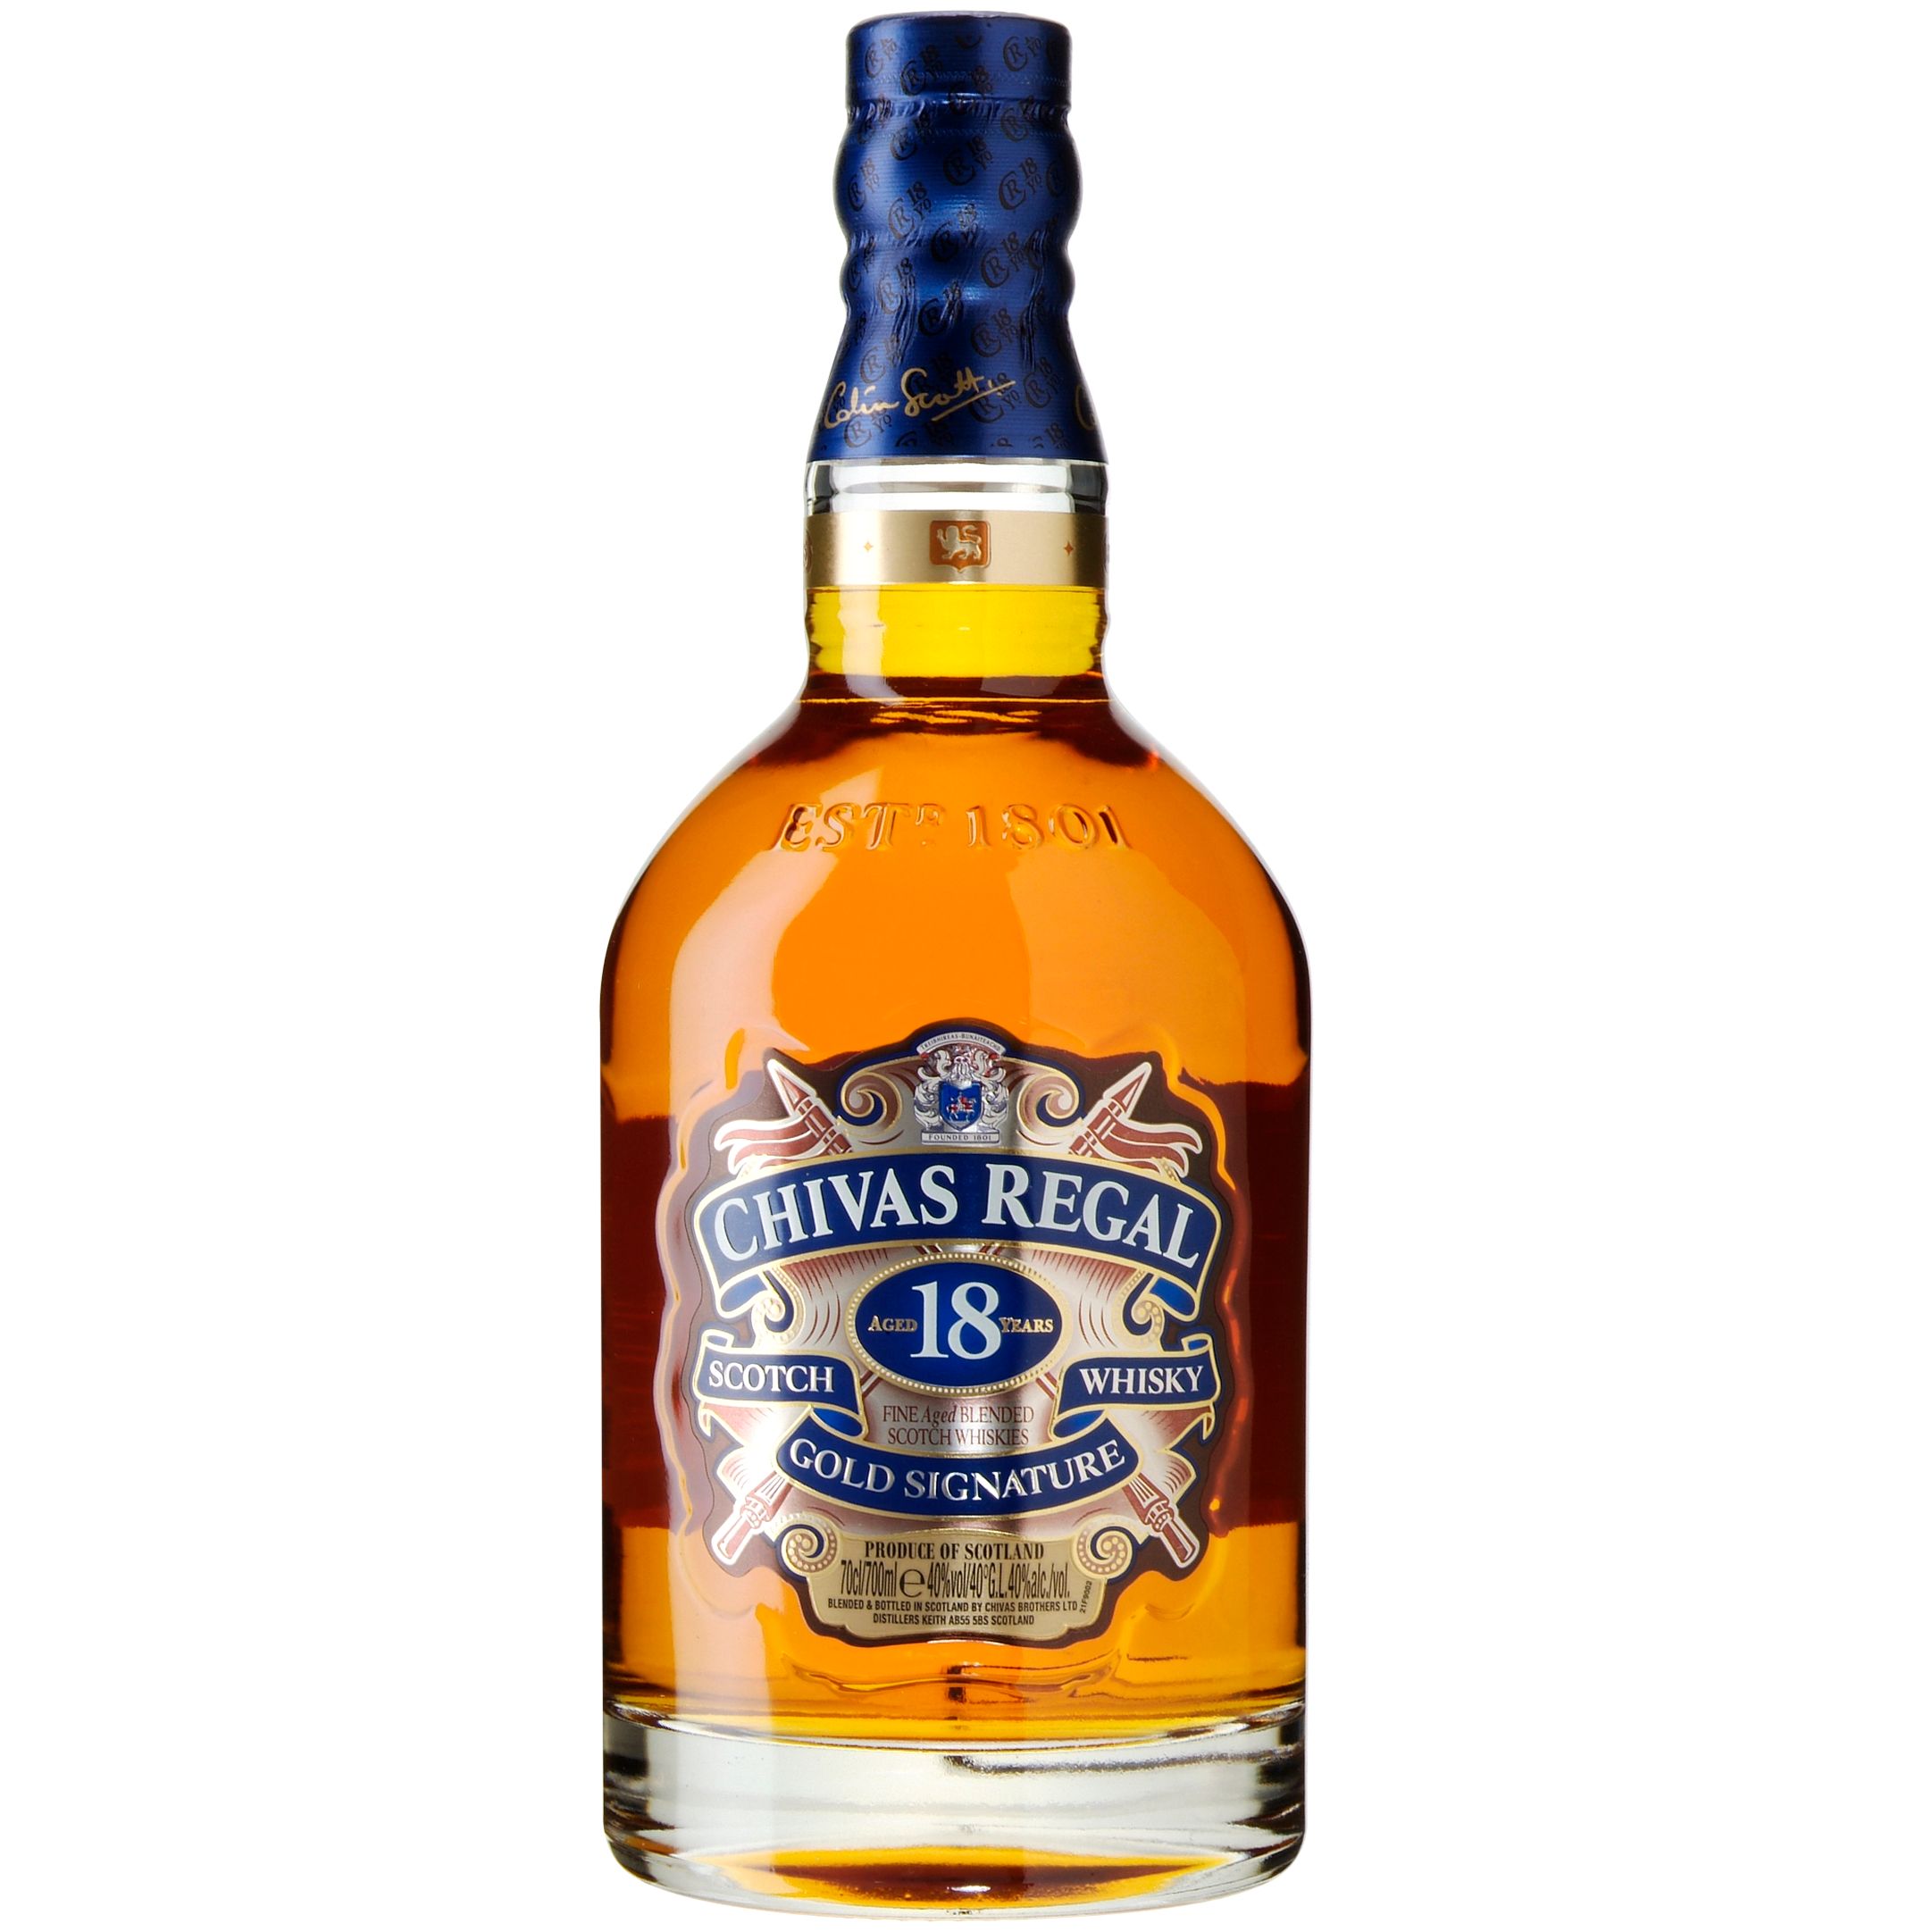 Chivas Regal 18-Year-Old Scotch Whisky at John Lewis